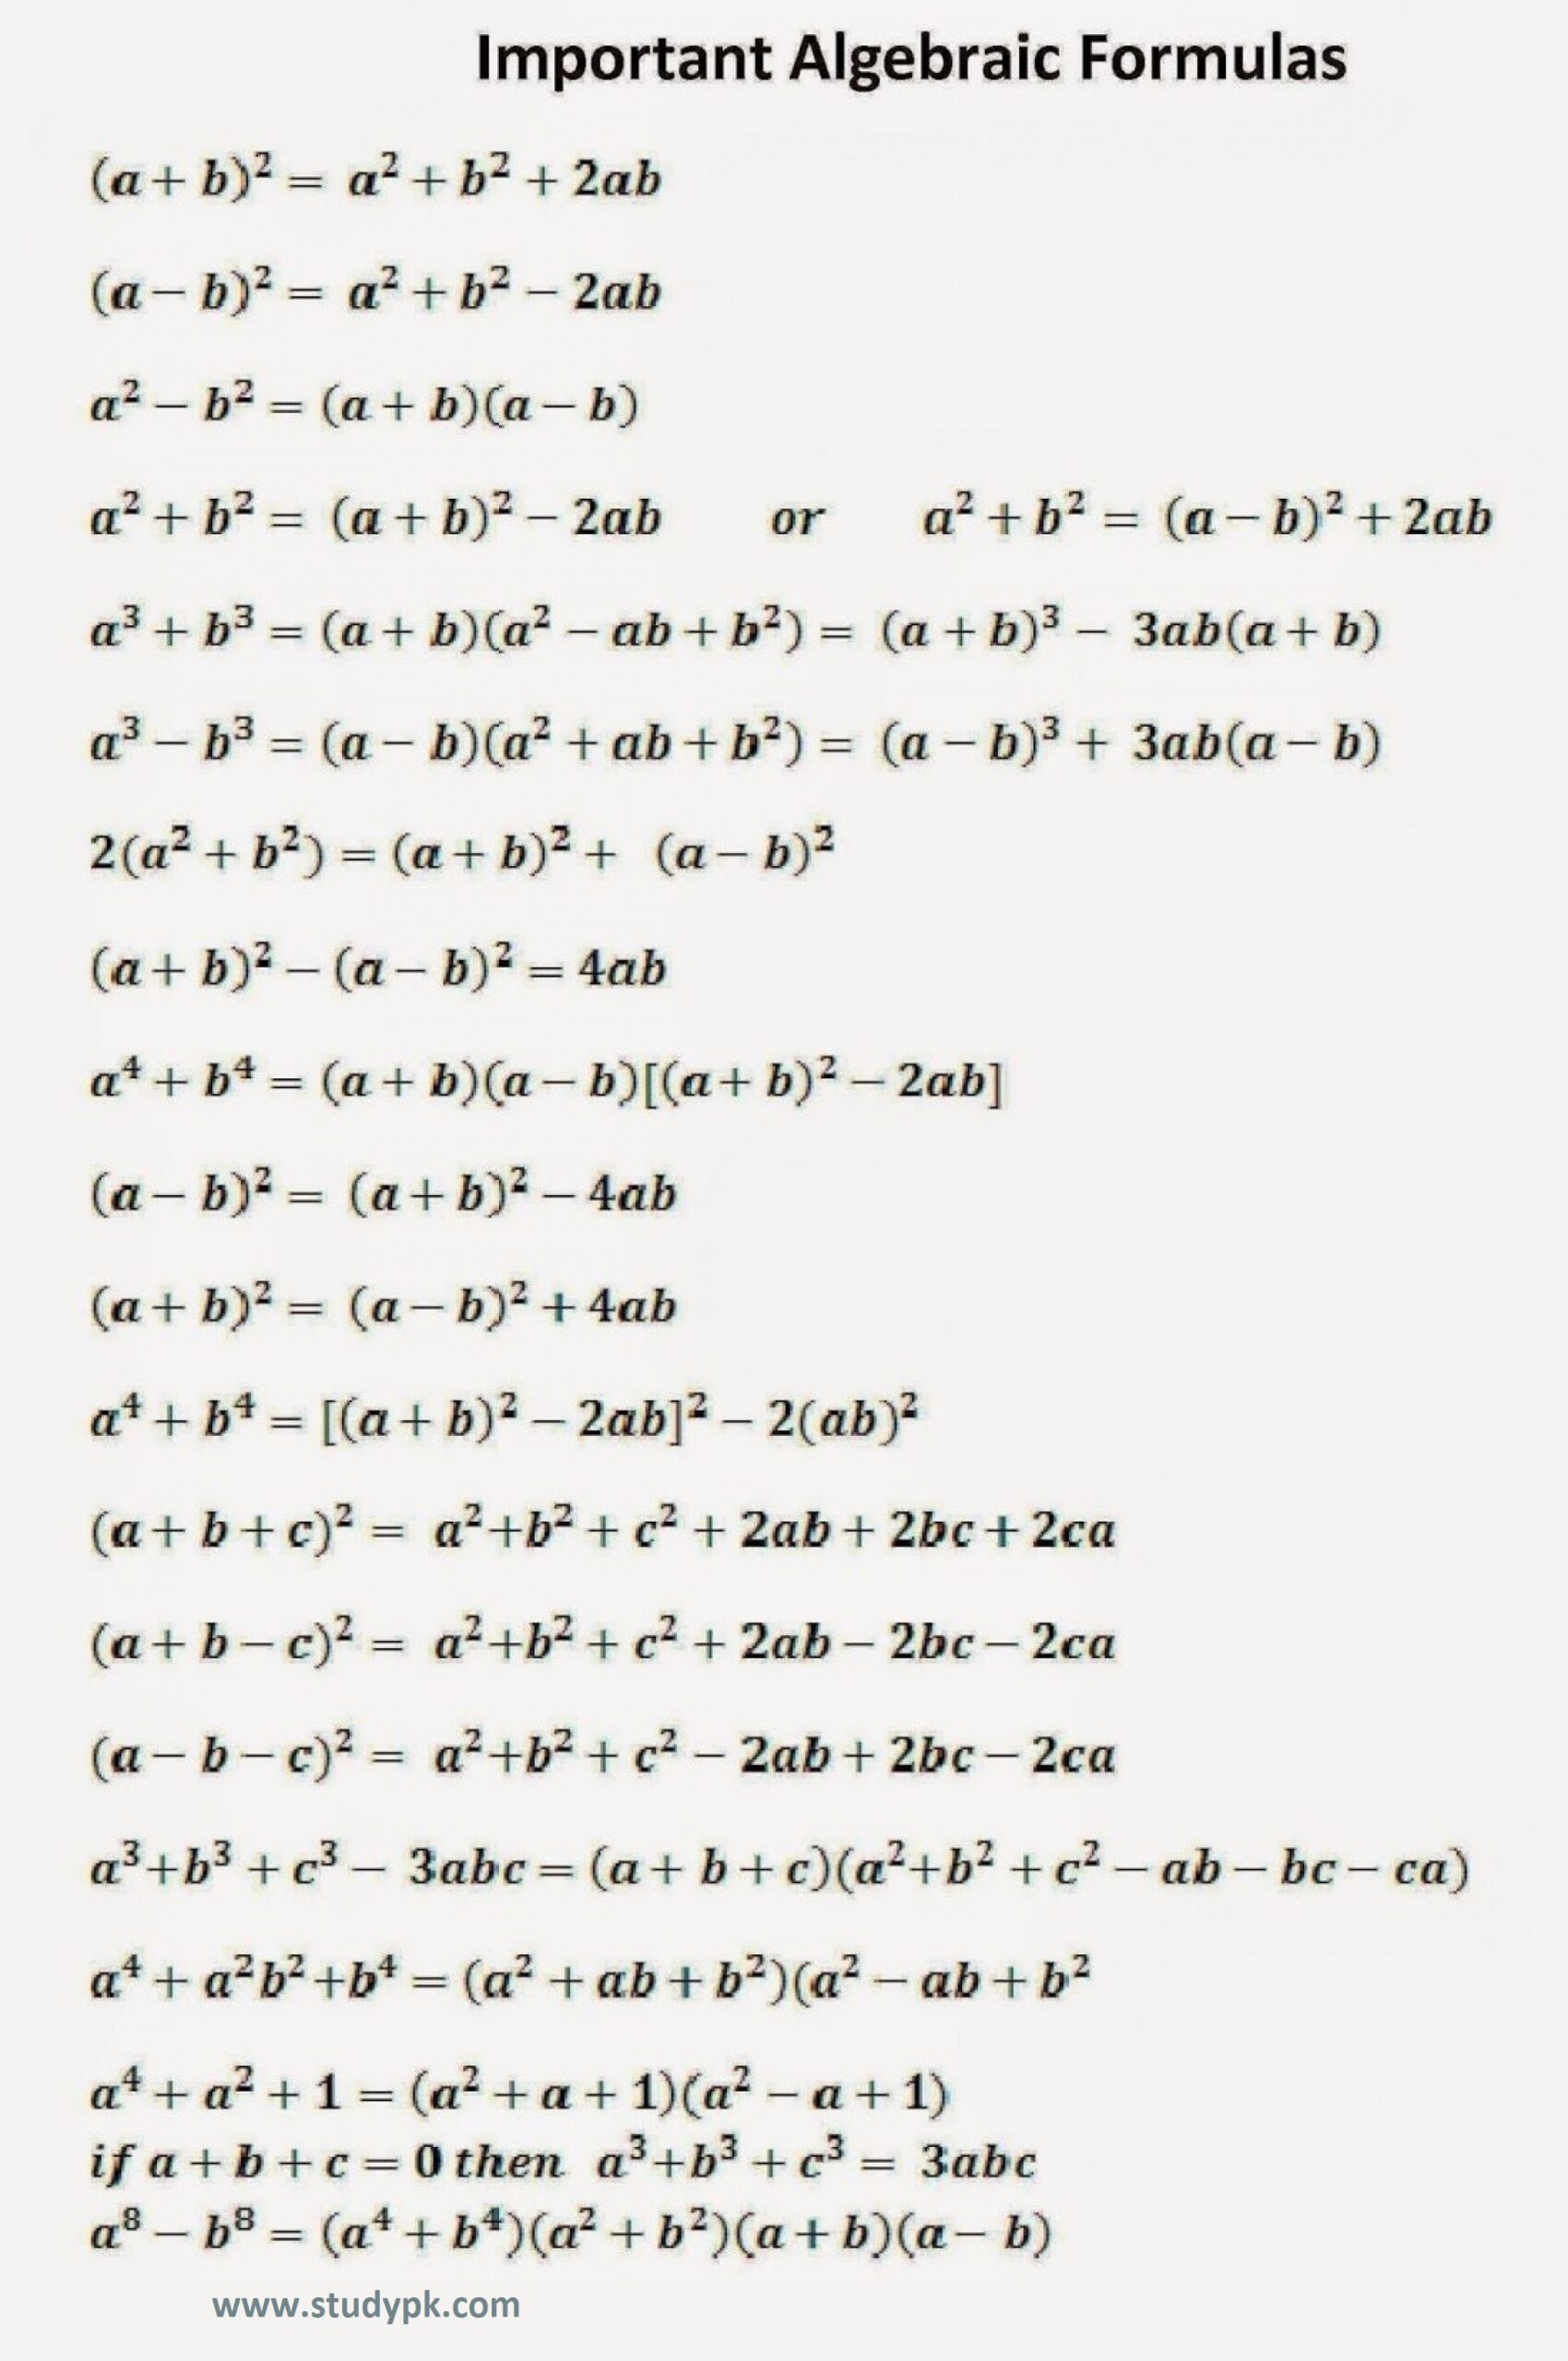 Important Algebraic Formula Definition and Examples - StudyPK